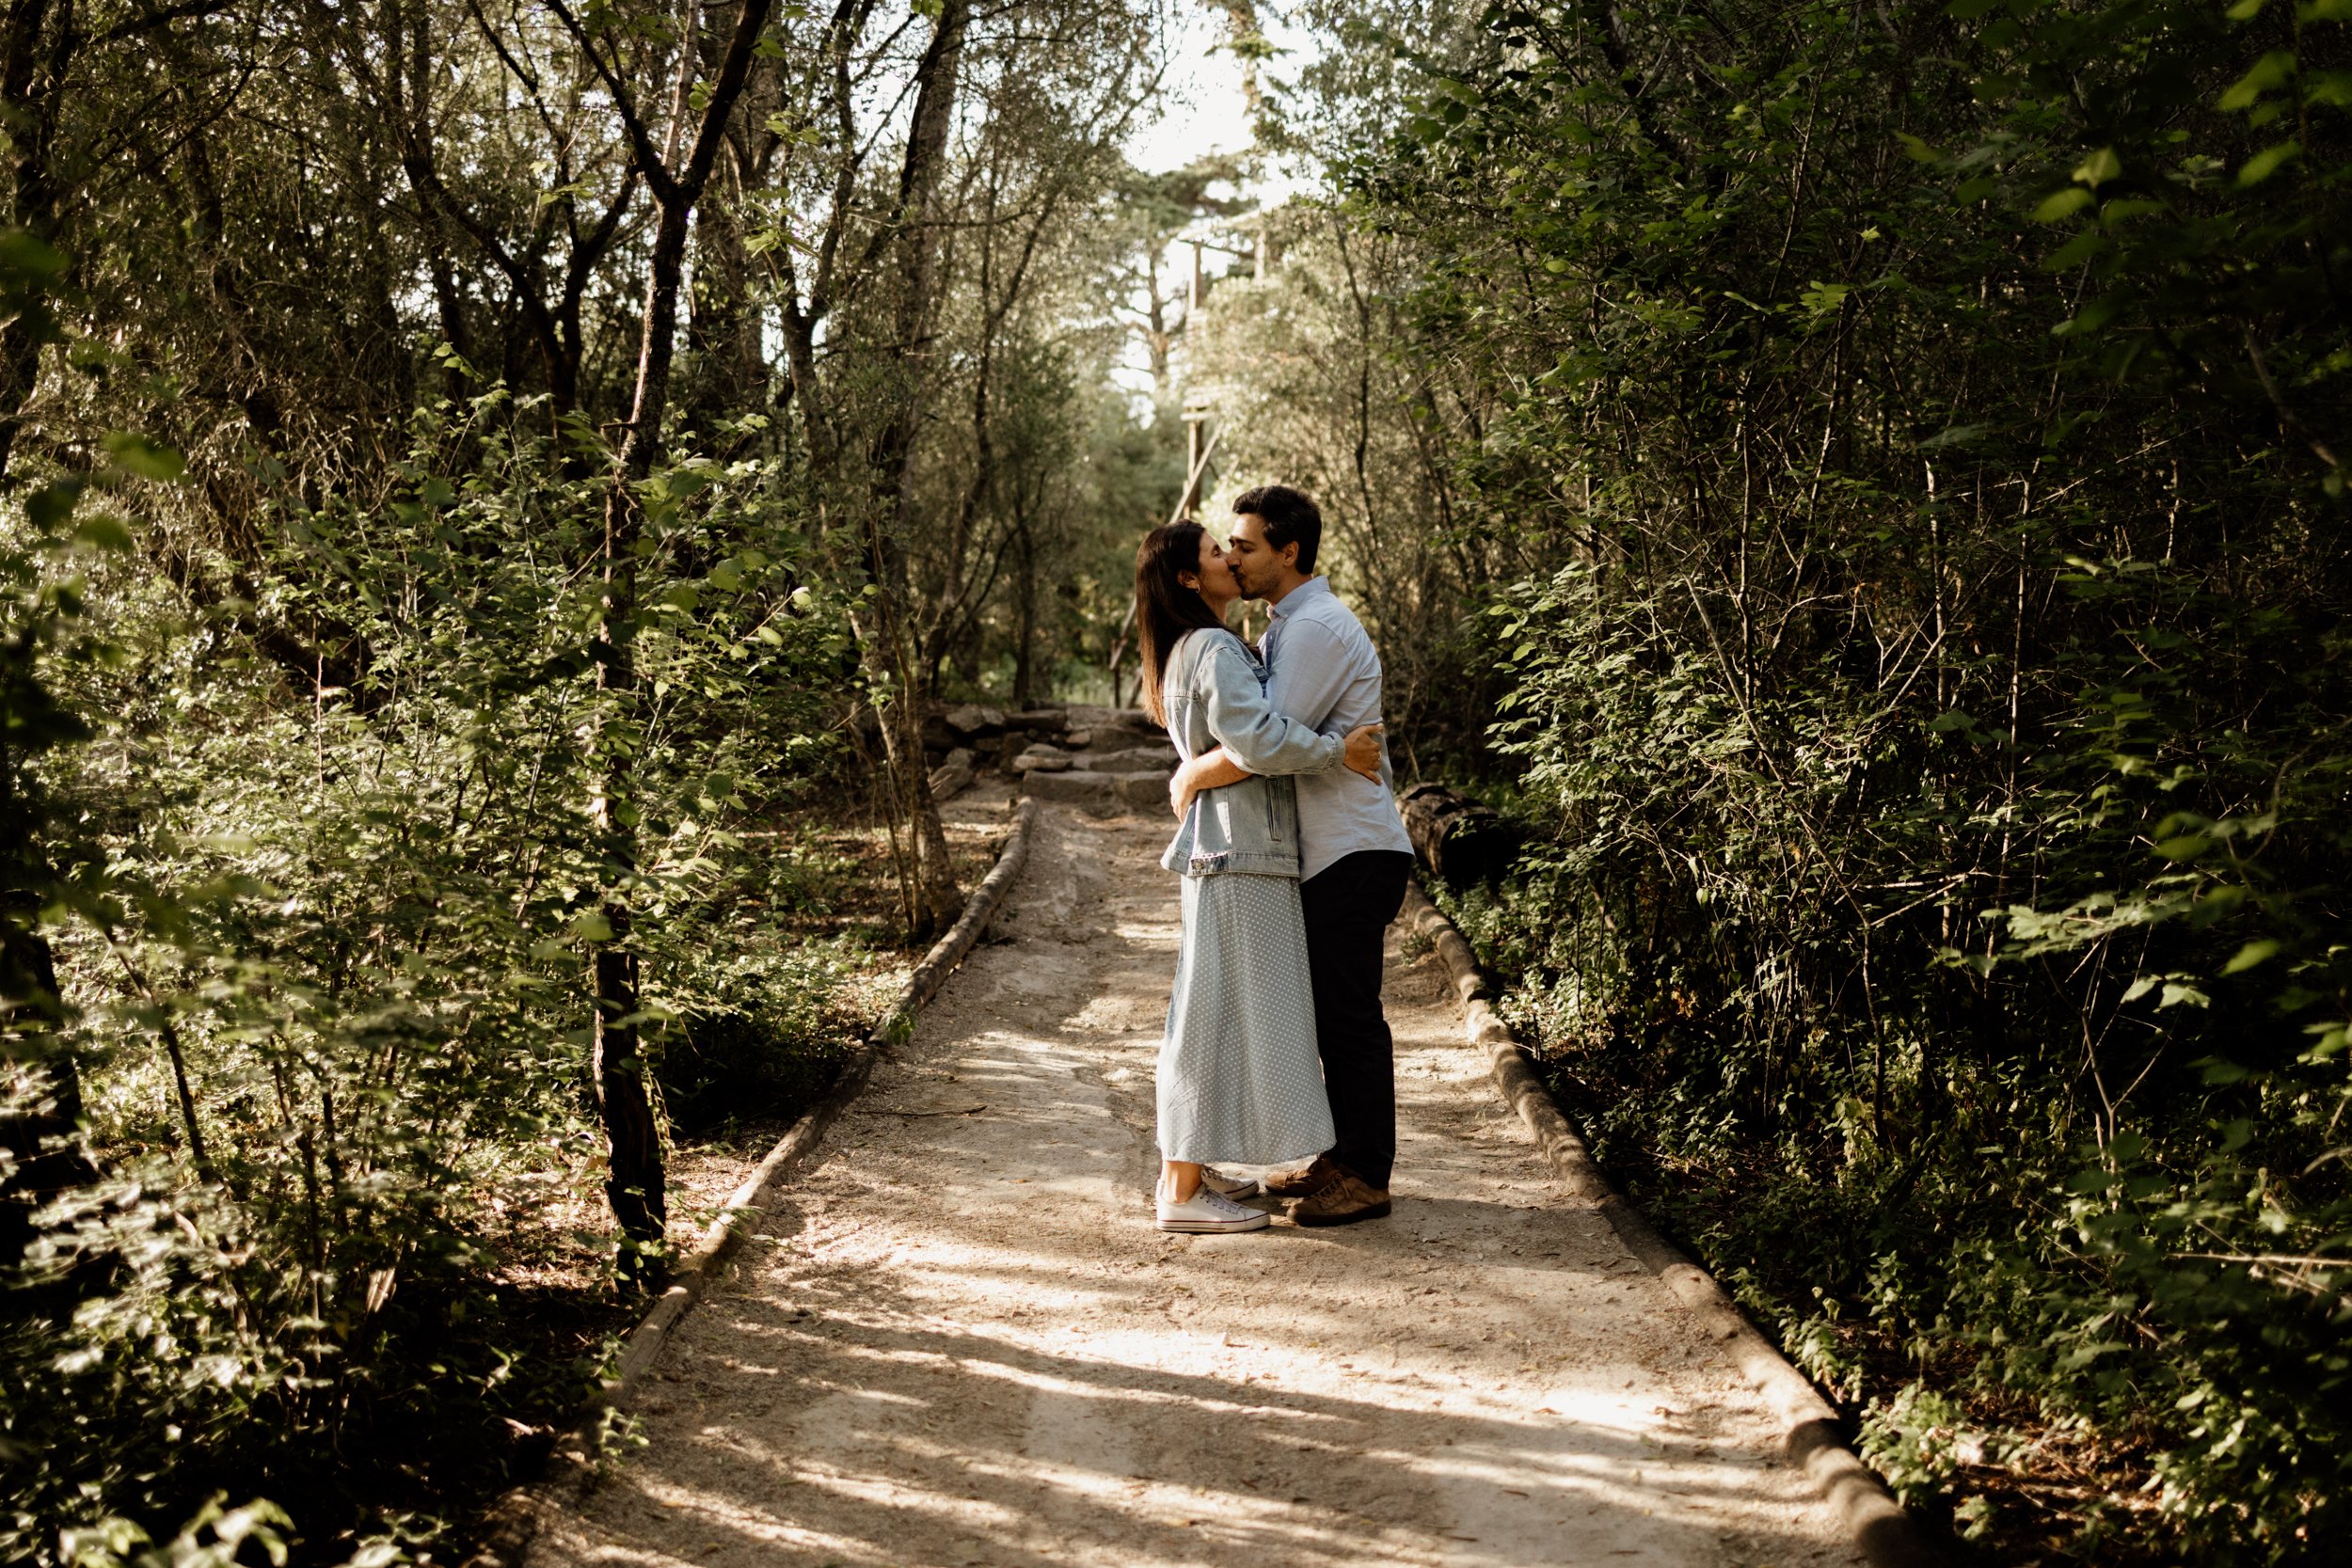 Tania Carvalho Couple Photoshoot in Bosque dos Gaios, Estoril